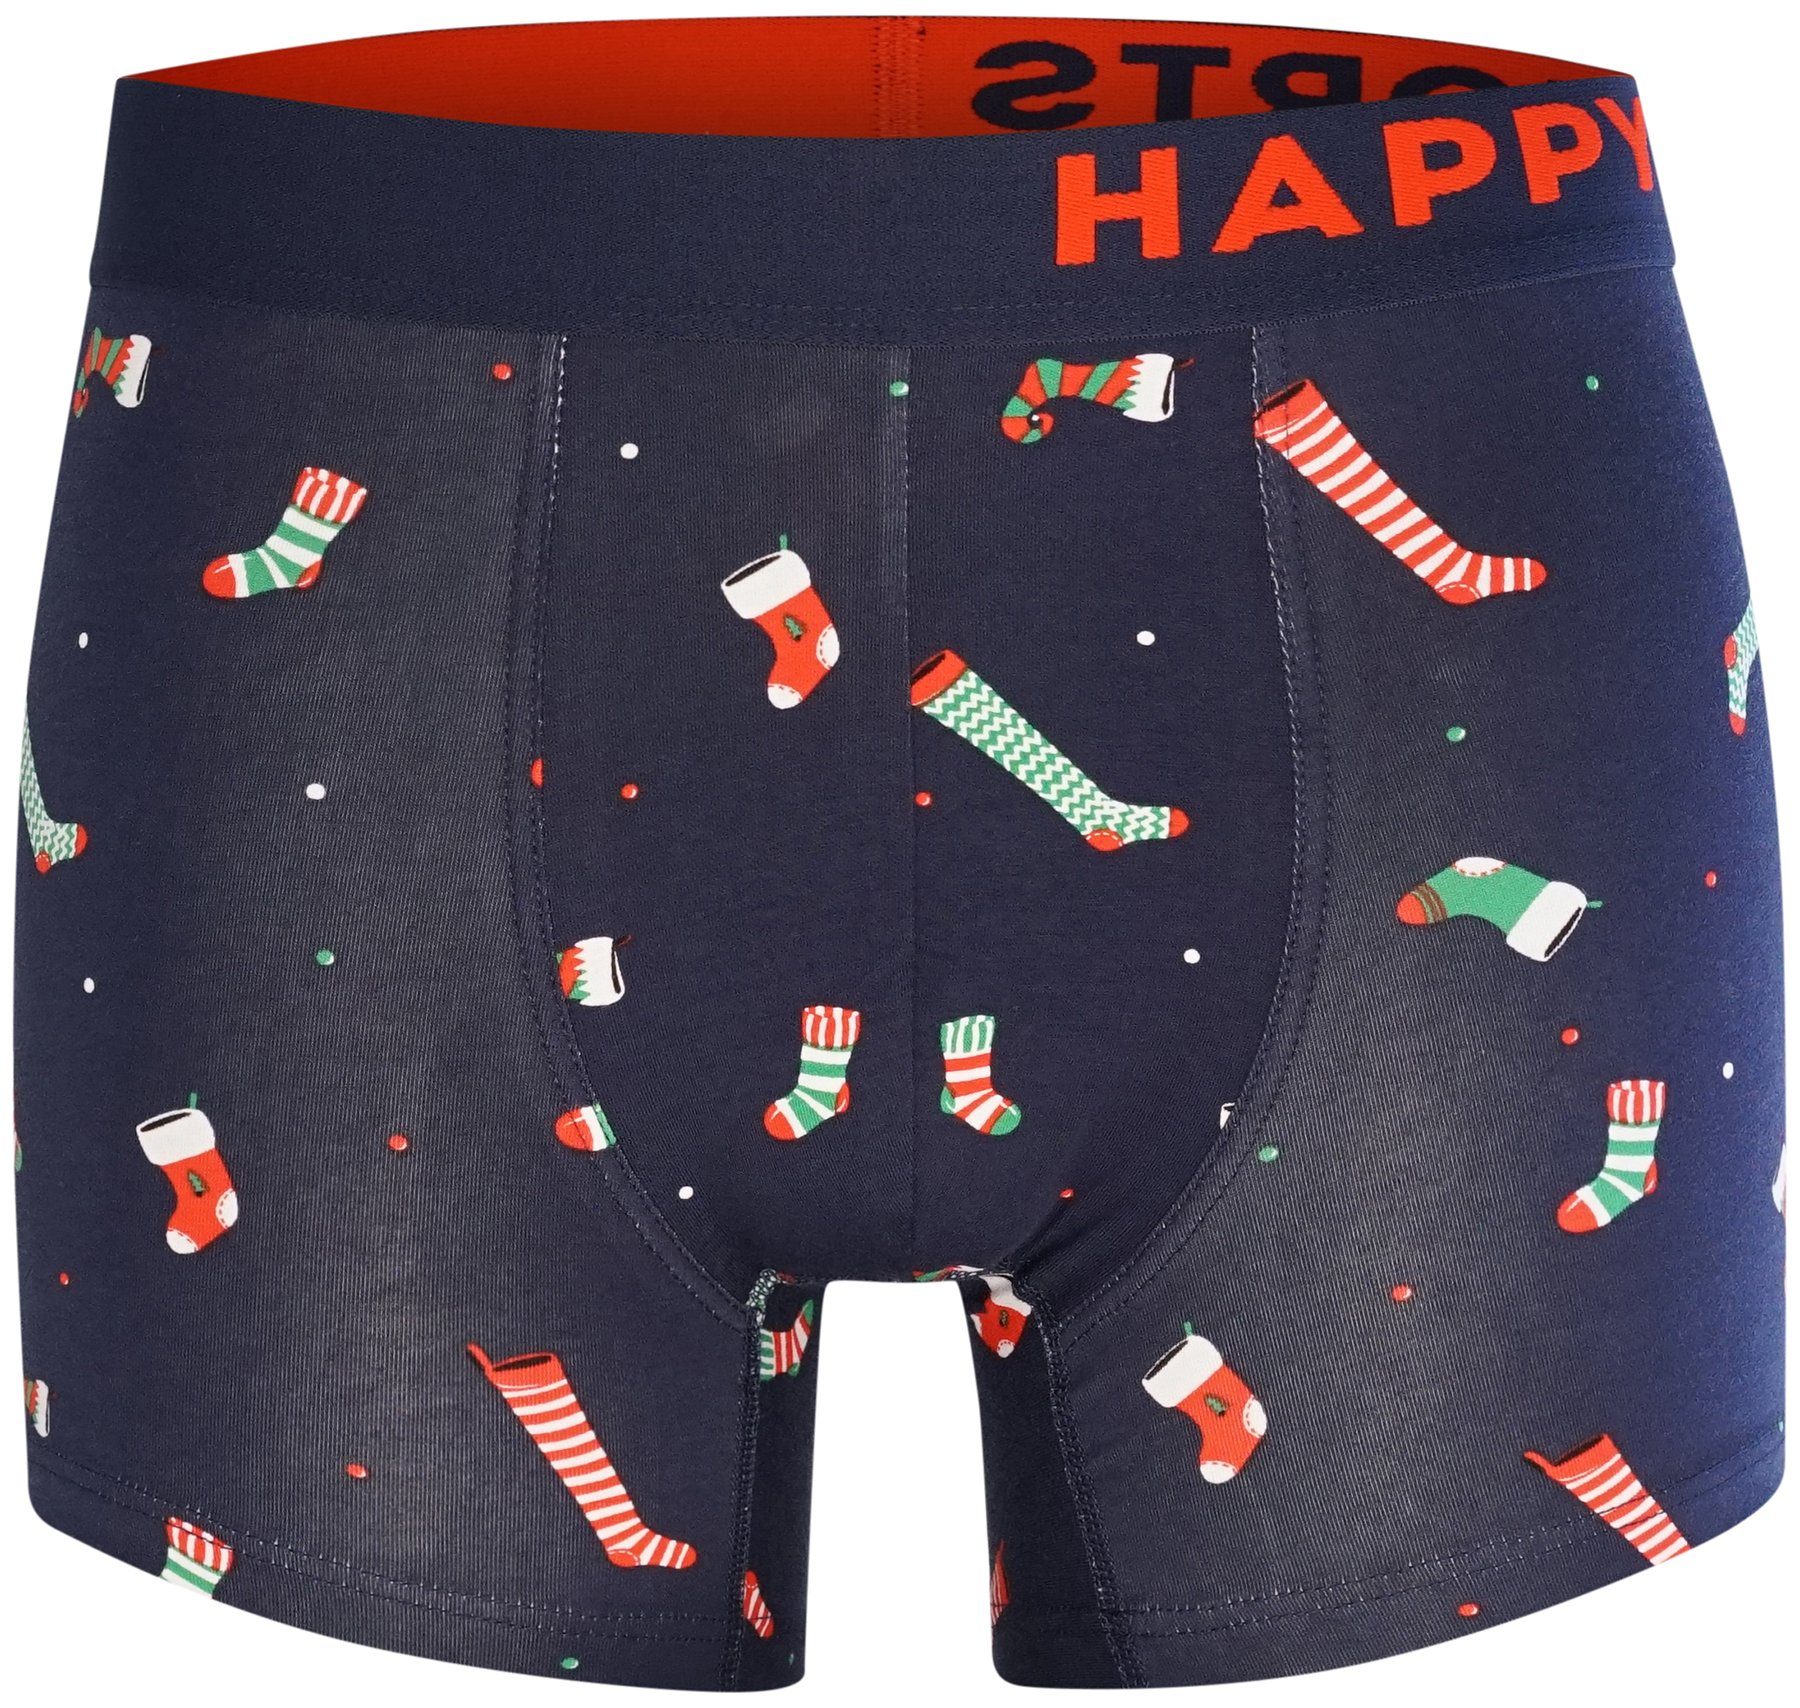 Wäsche/Bademode Boxershorts HAPPY SHORTS Trunk 2-Pack Christmas Stockings